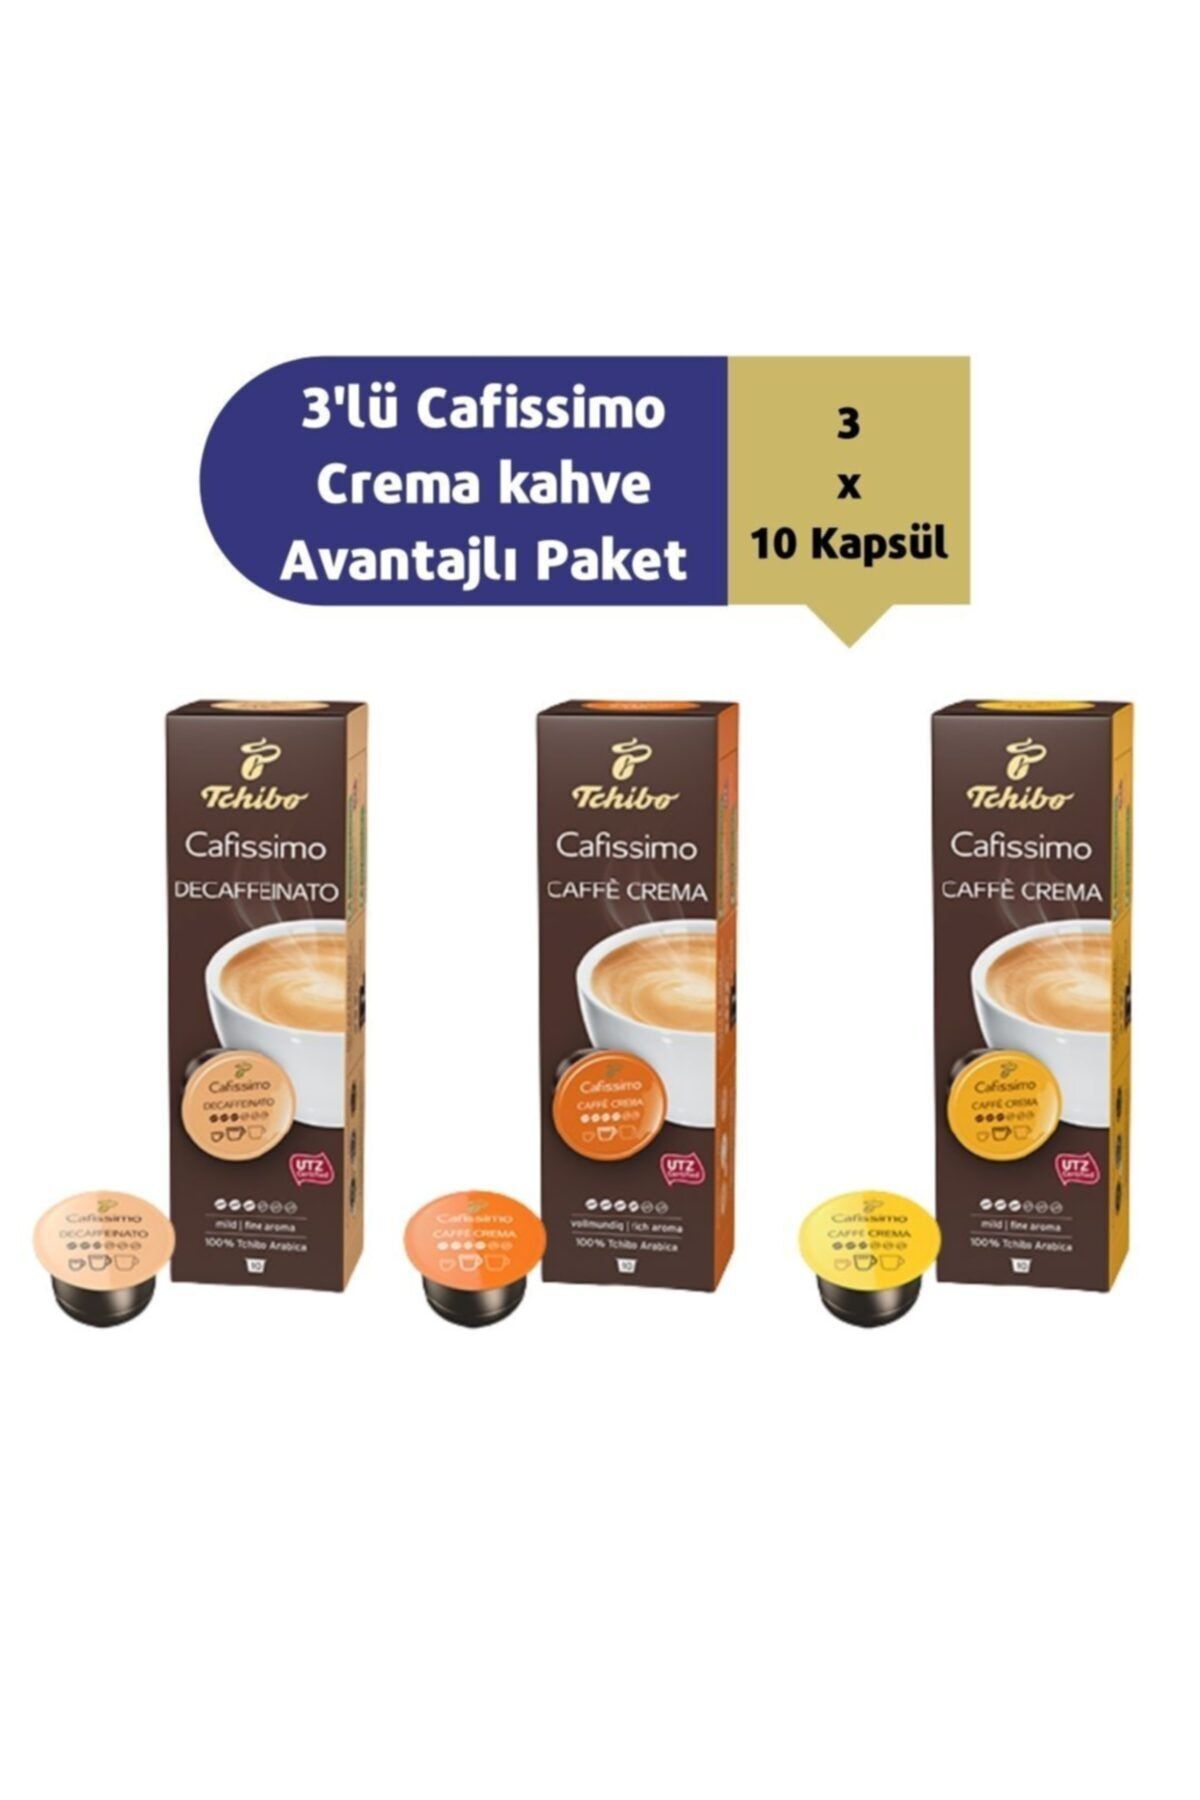 By Tüfekçi 3'lü Cafissimo Crema Kahve Avantajlı Paket 3x10 Kapsül